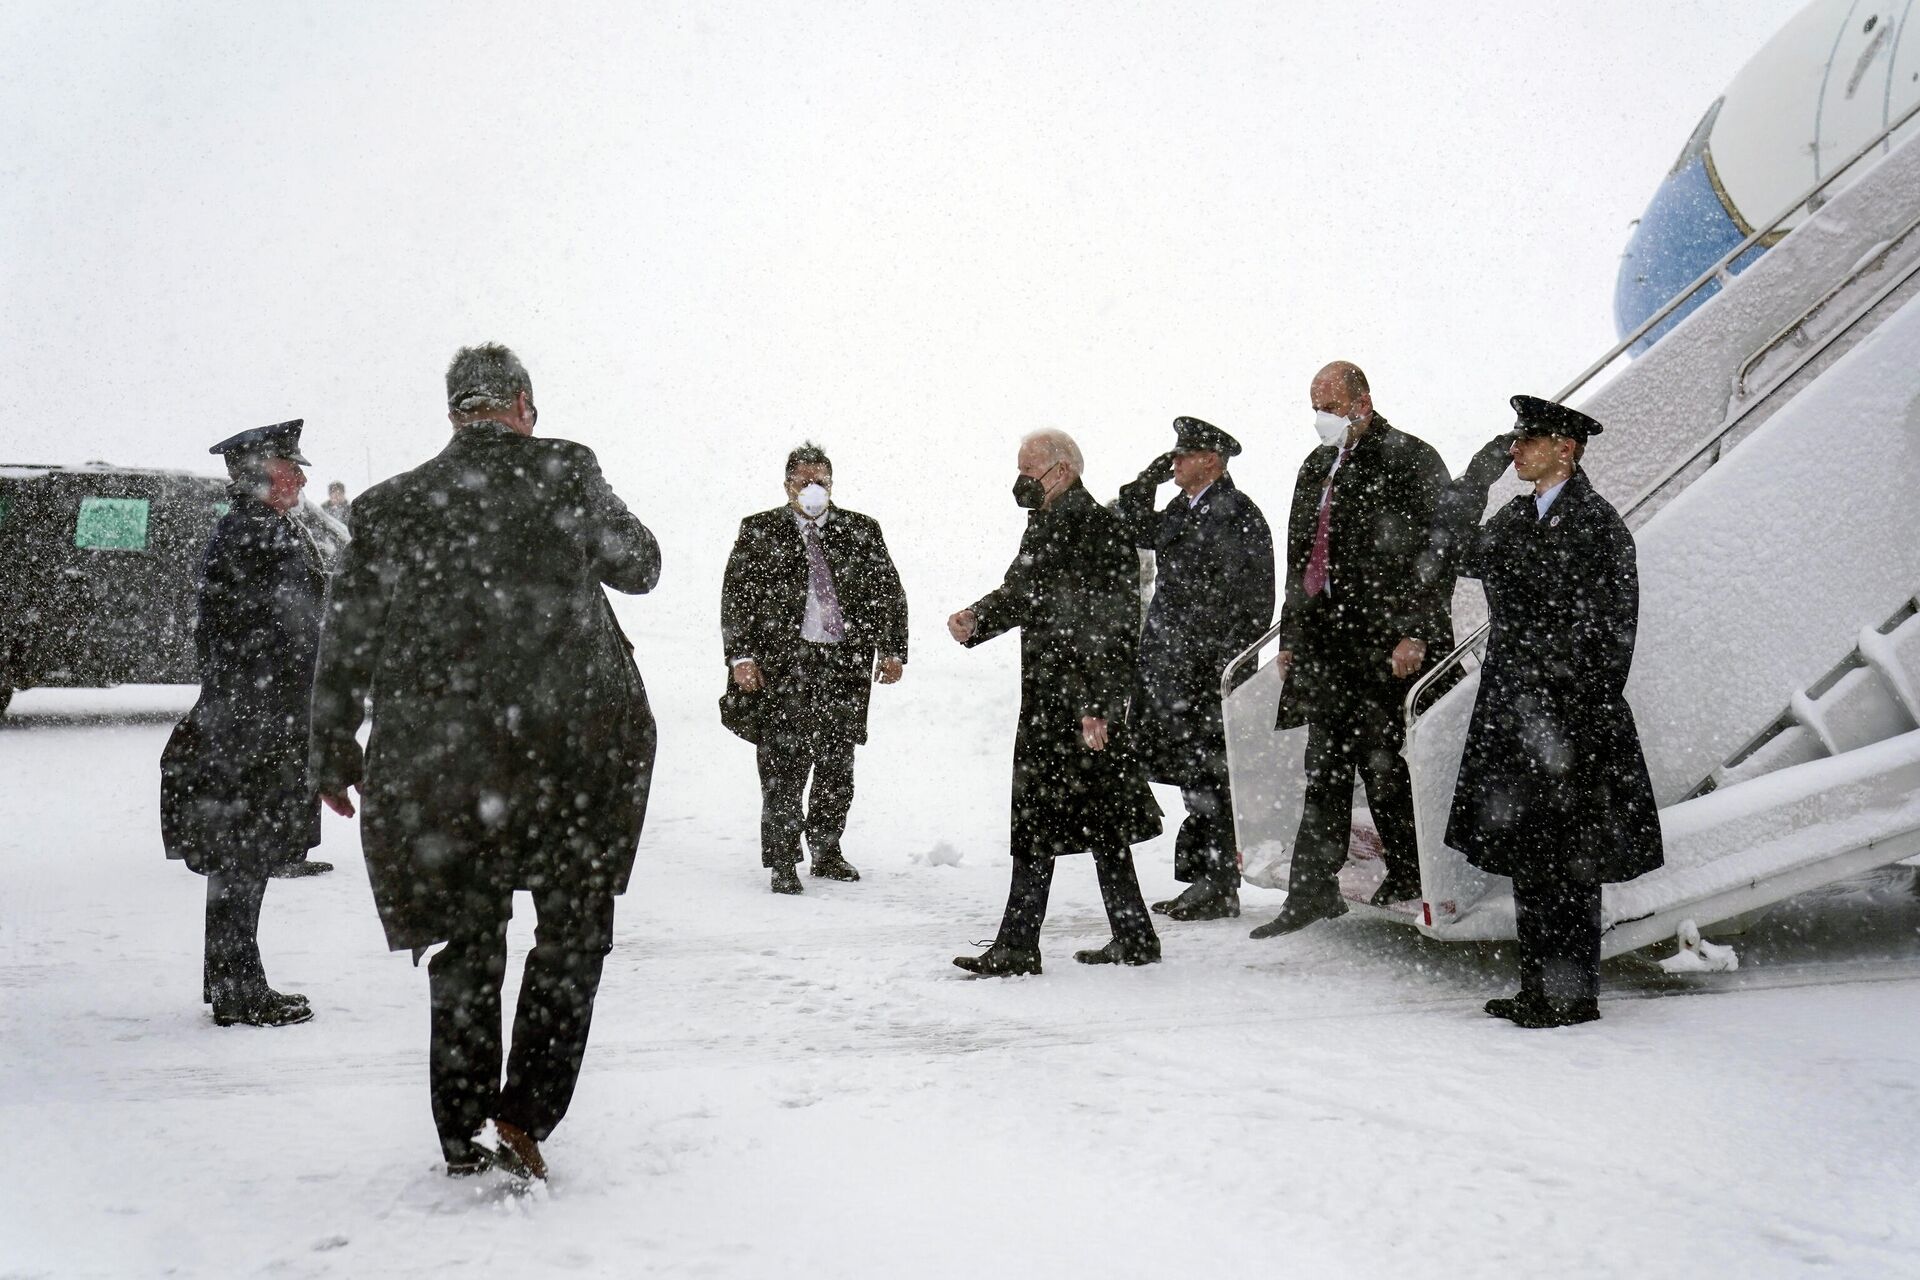 President Joe Biden arrives on Air Force One during winter snowstorm at Andrews Air Force Base, Md., Monday, Jan. 3, 2022, en route to Washington. - Sputnik International, 1920, 03.01.2022